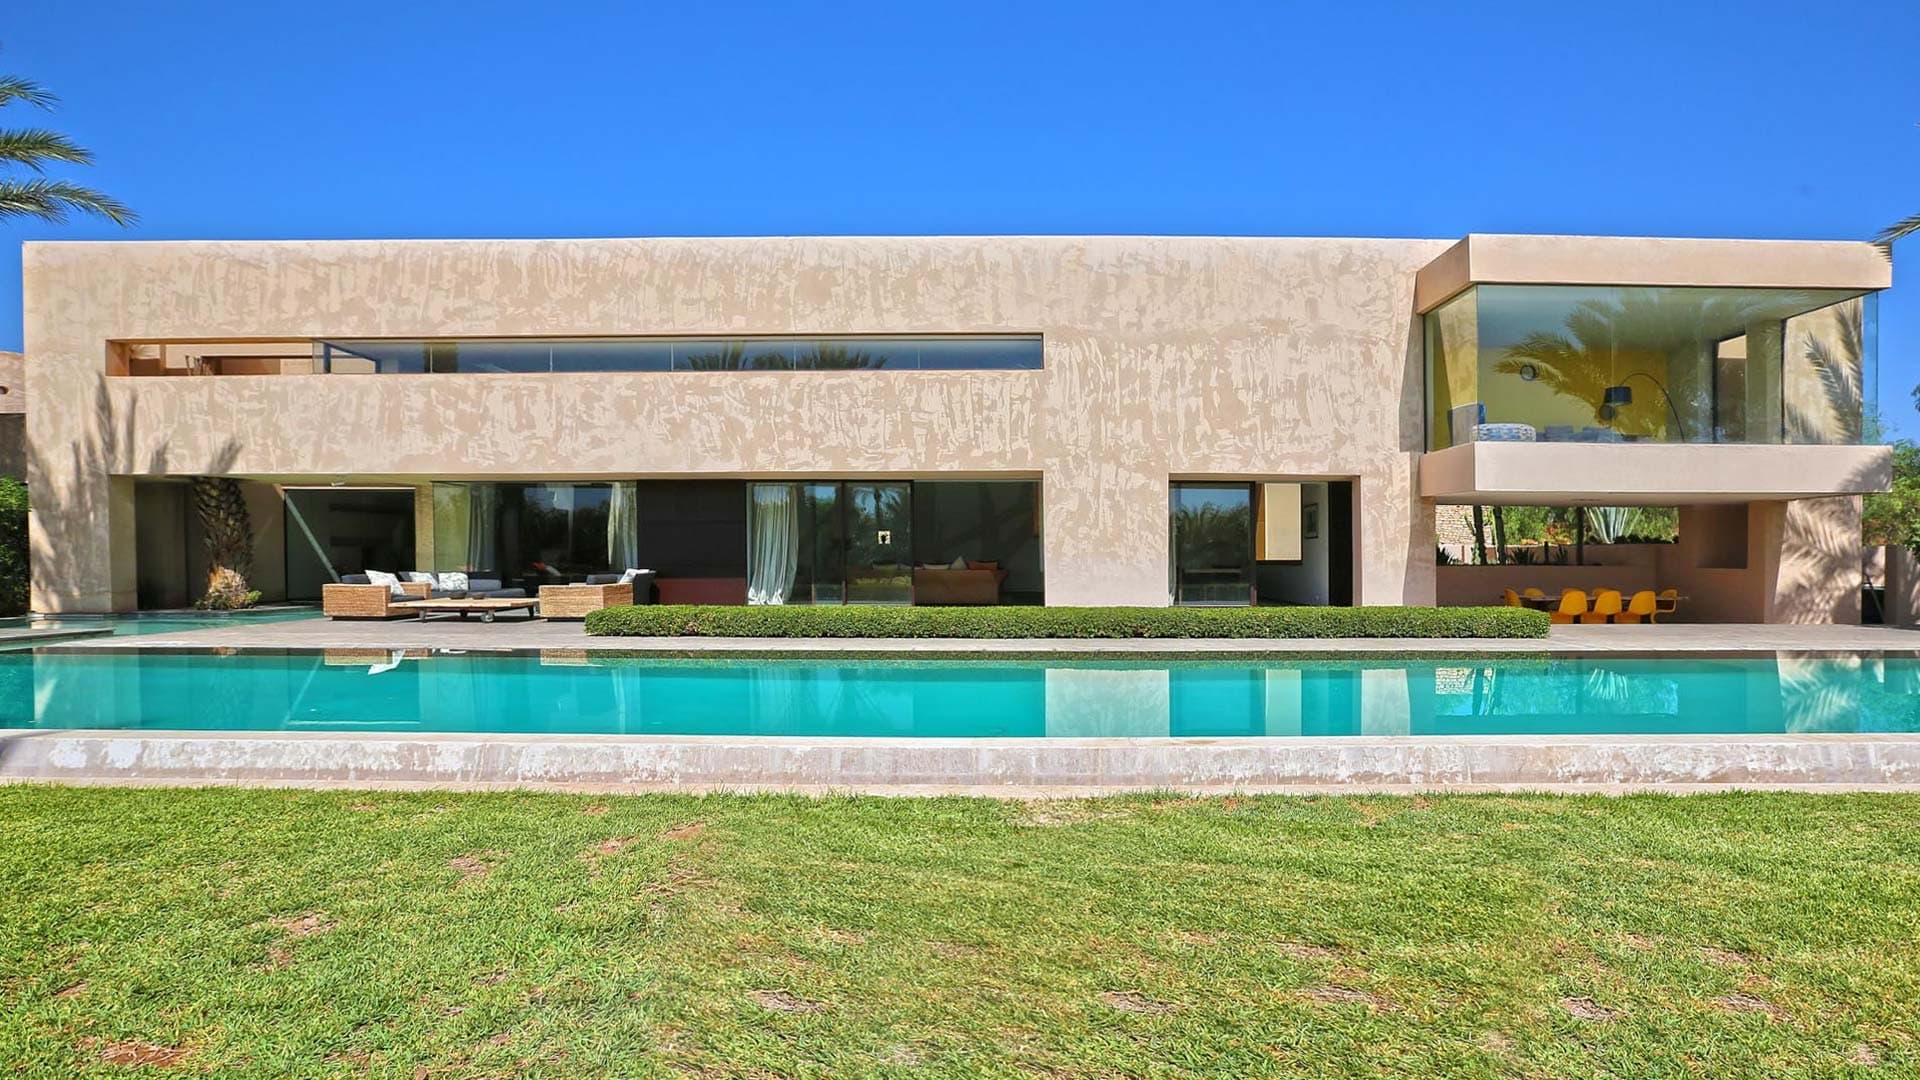 6 Bedroom Villa For Sale Marrakech Lp08713 380a54800664740.jpg